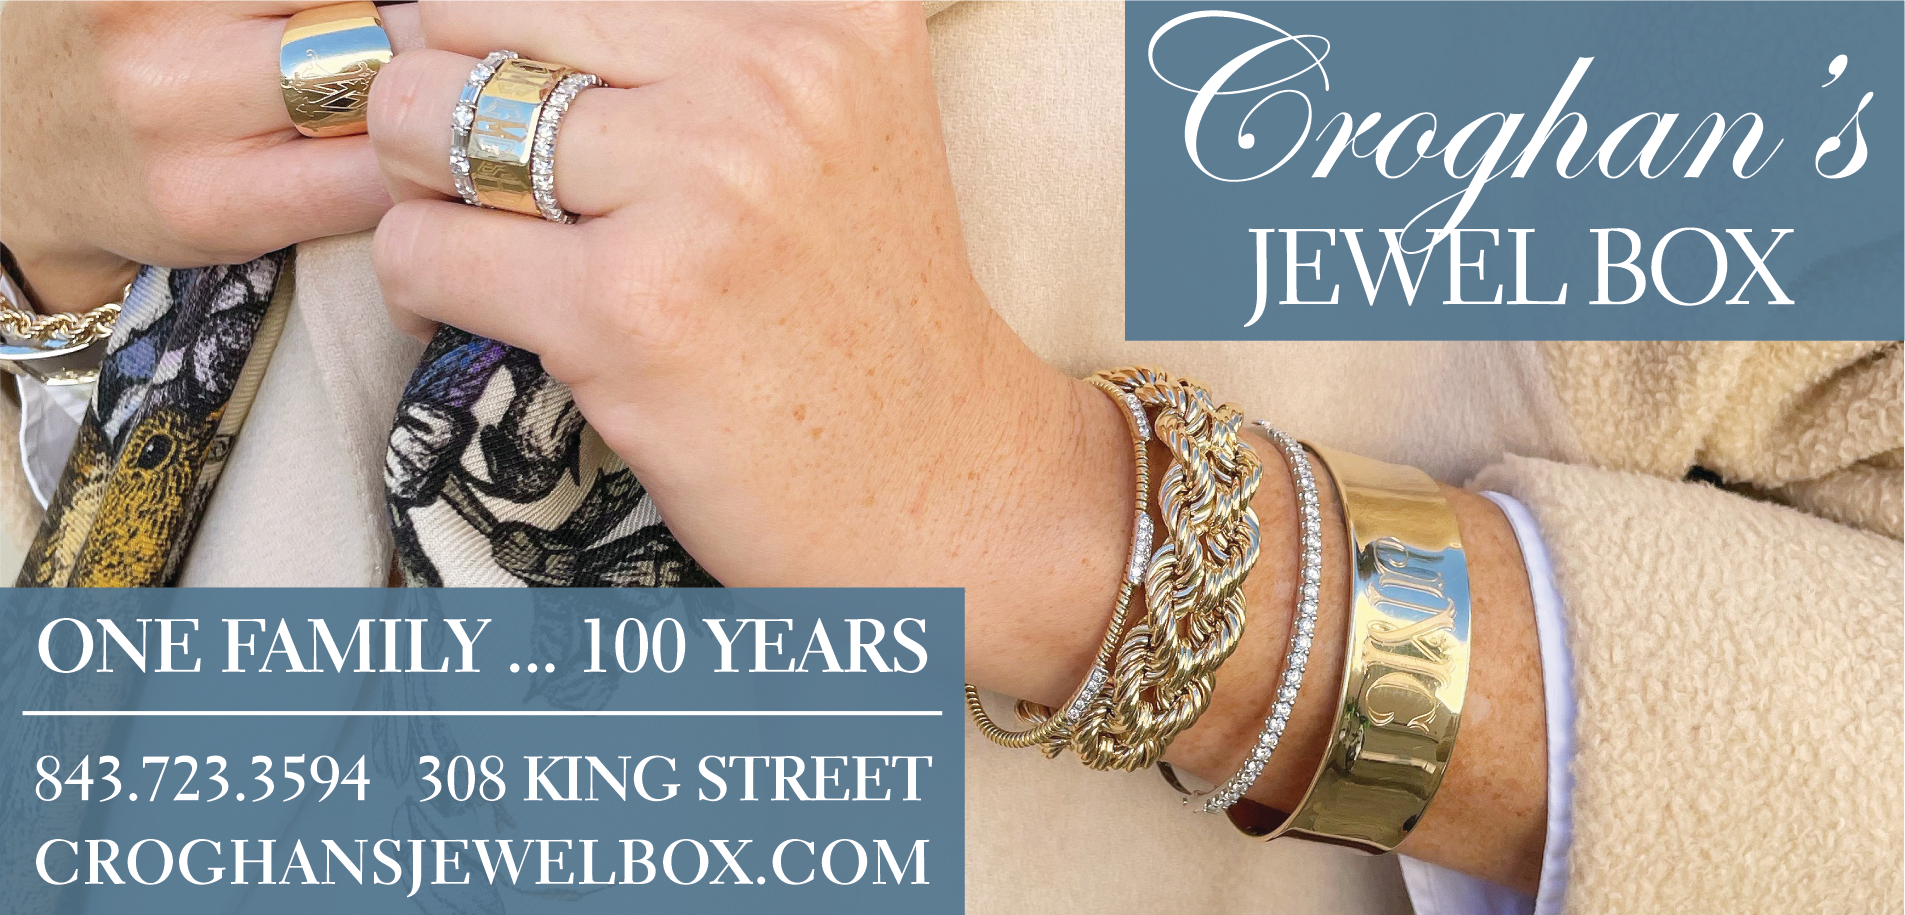 Croghan's Jewel Box Print Ad